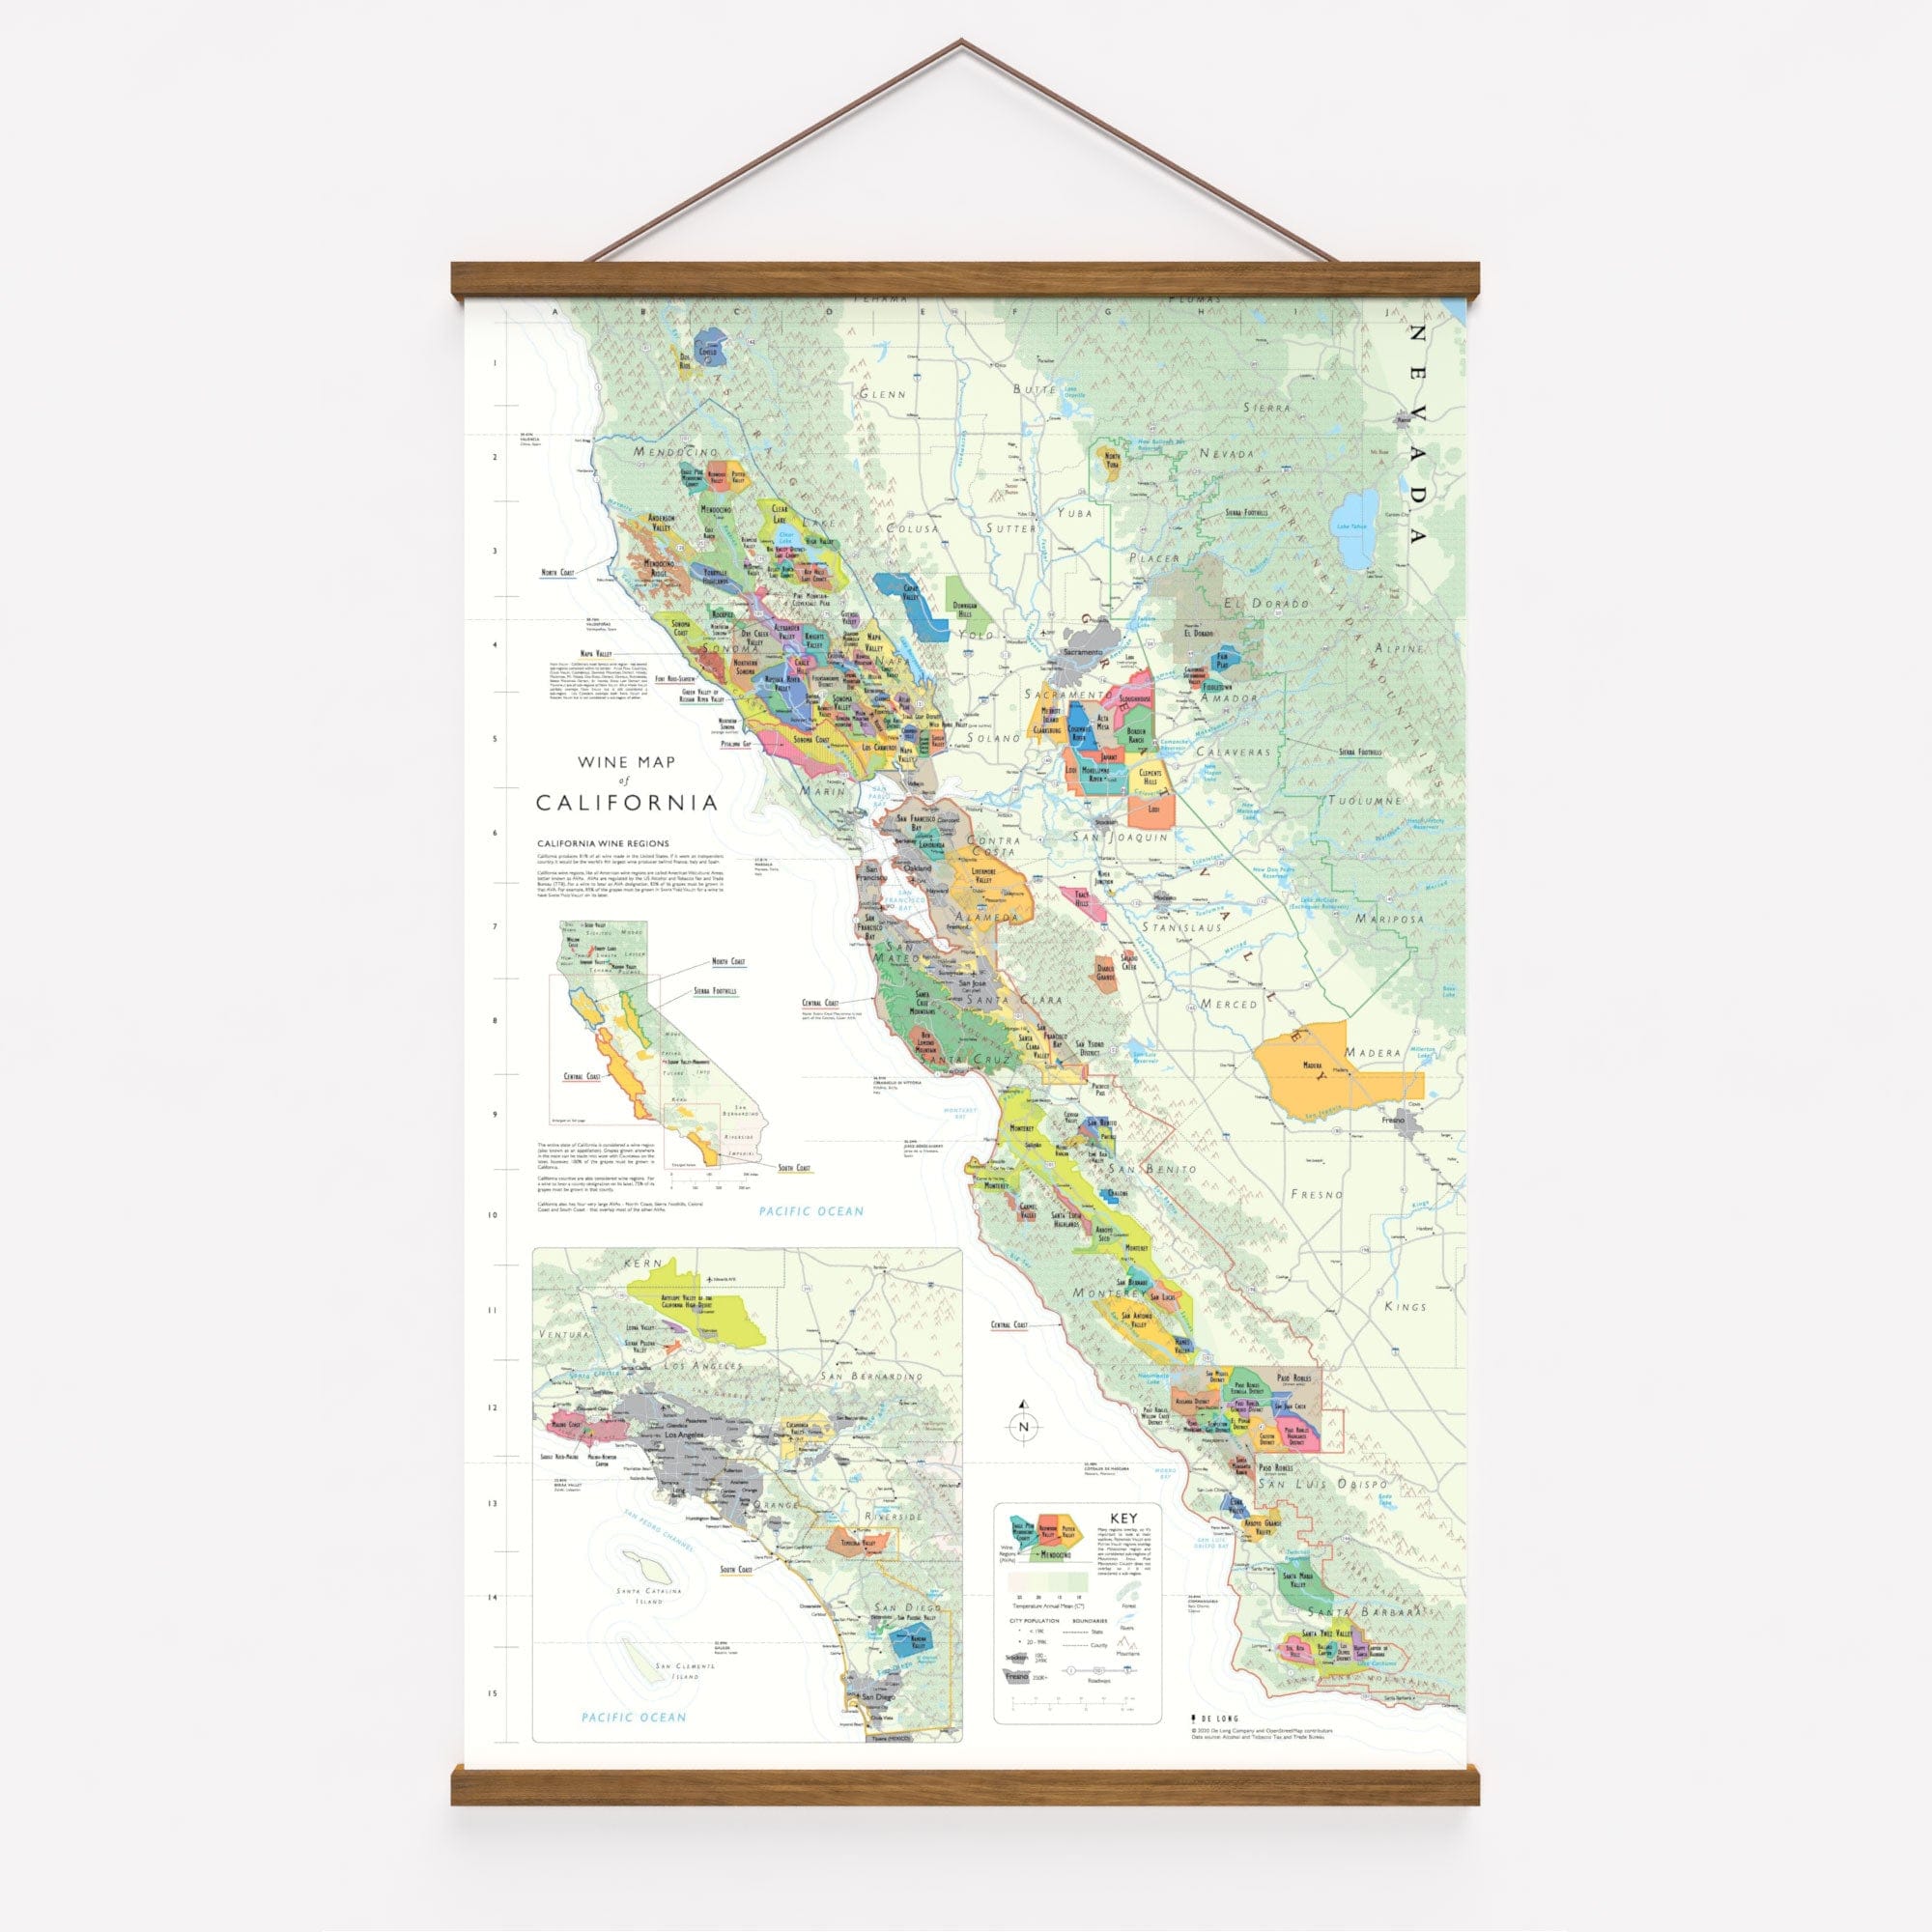 Wine Map of California